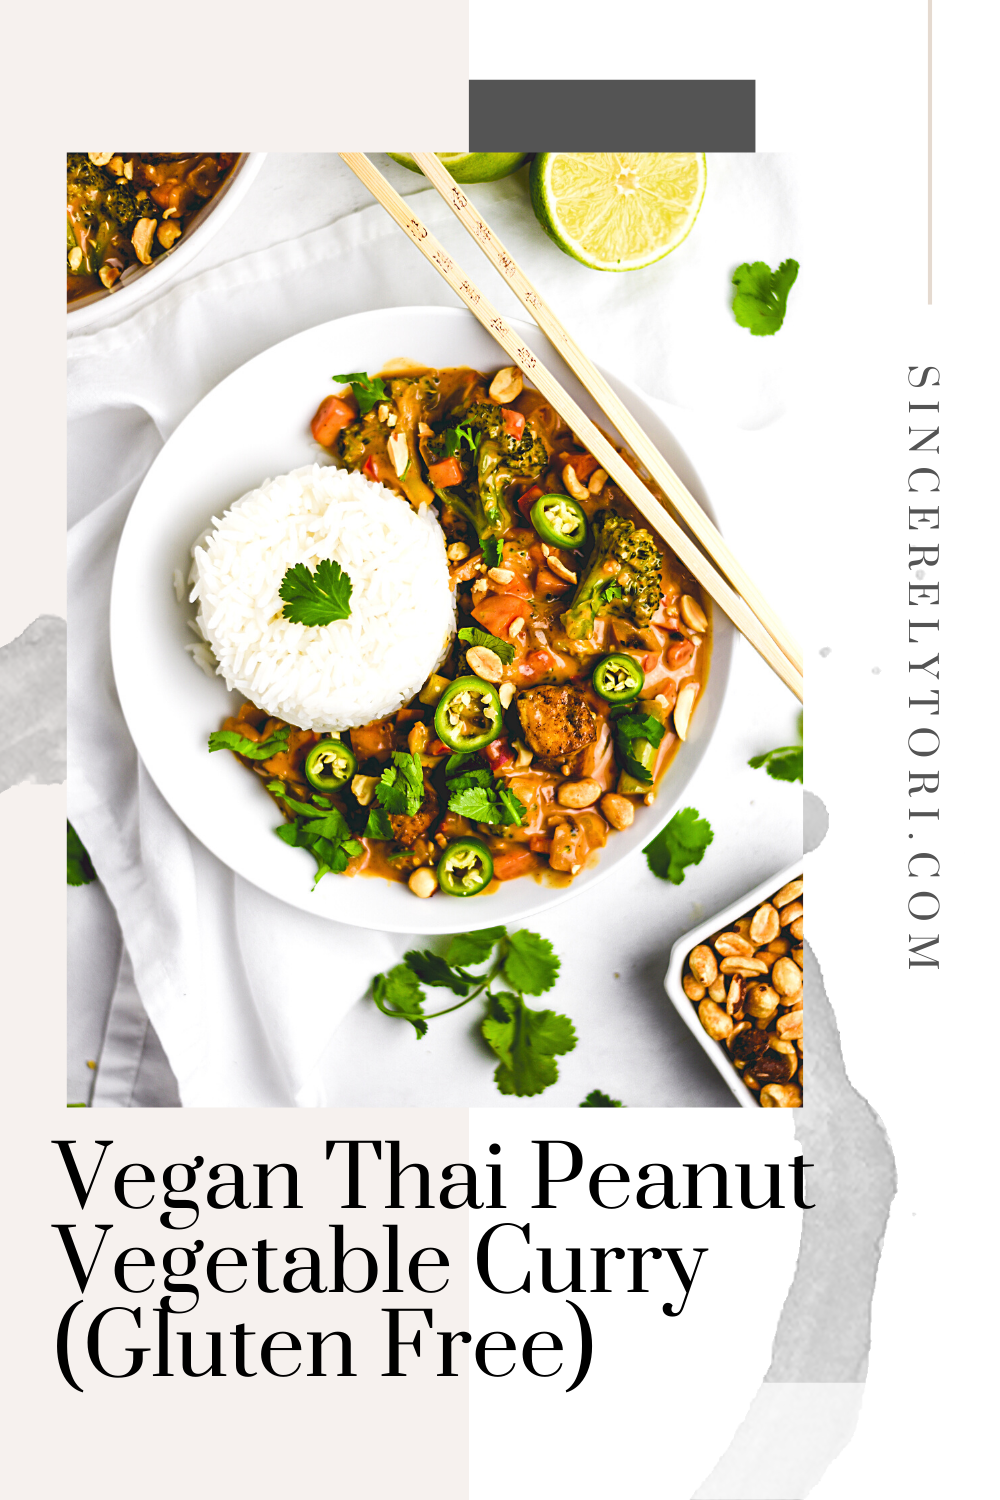 Vegan Thai Vegetable Peanut Tori (Gluten Free) Curry – Sincerely